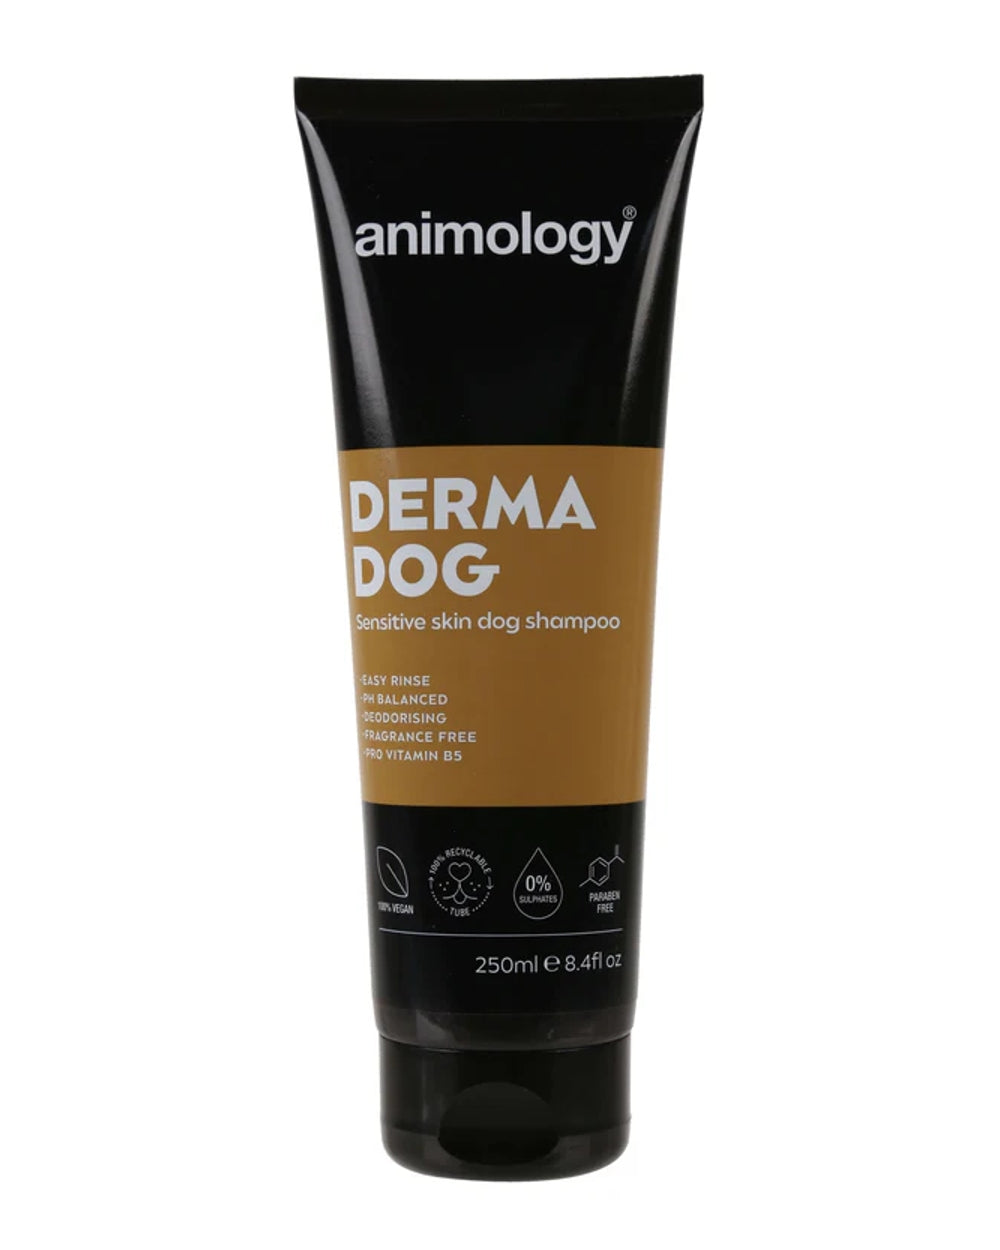 Animology Derma Dog Sensitive Skin Shampoo 250m on white background